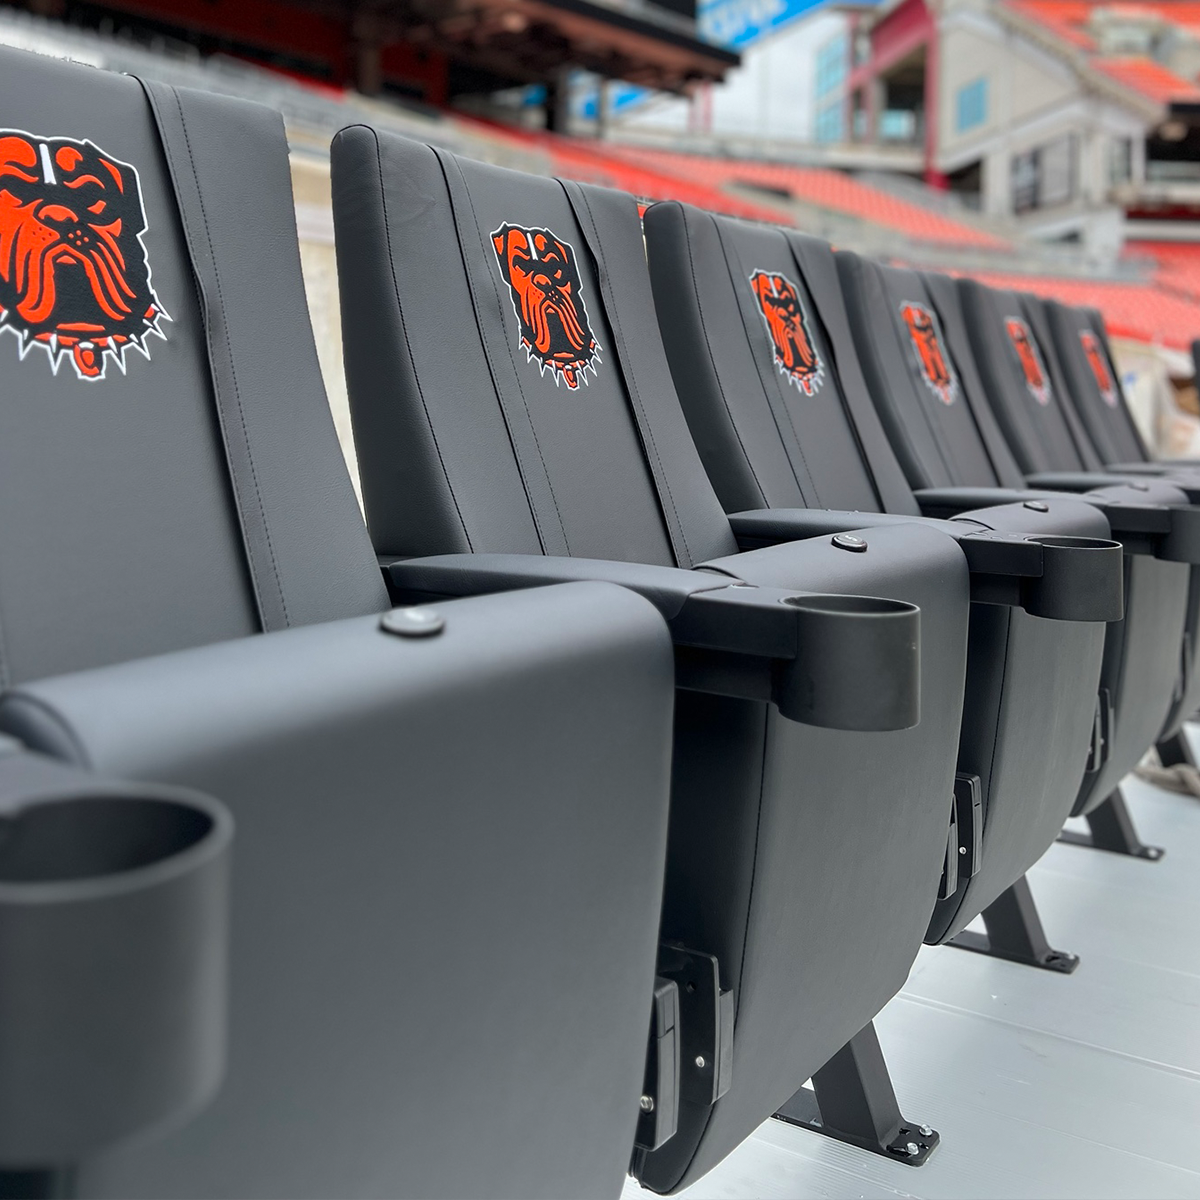 SuiteMax 3.5 VIP Seats with Tampa Bay Buccaneers Primary Super Bowl LV Logo